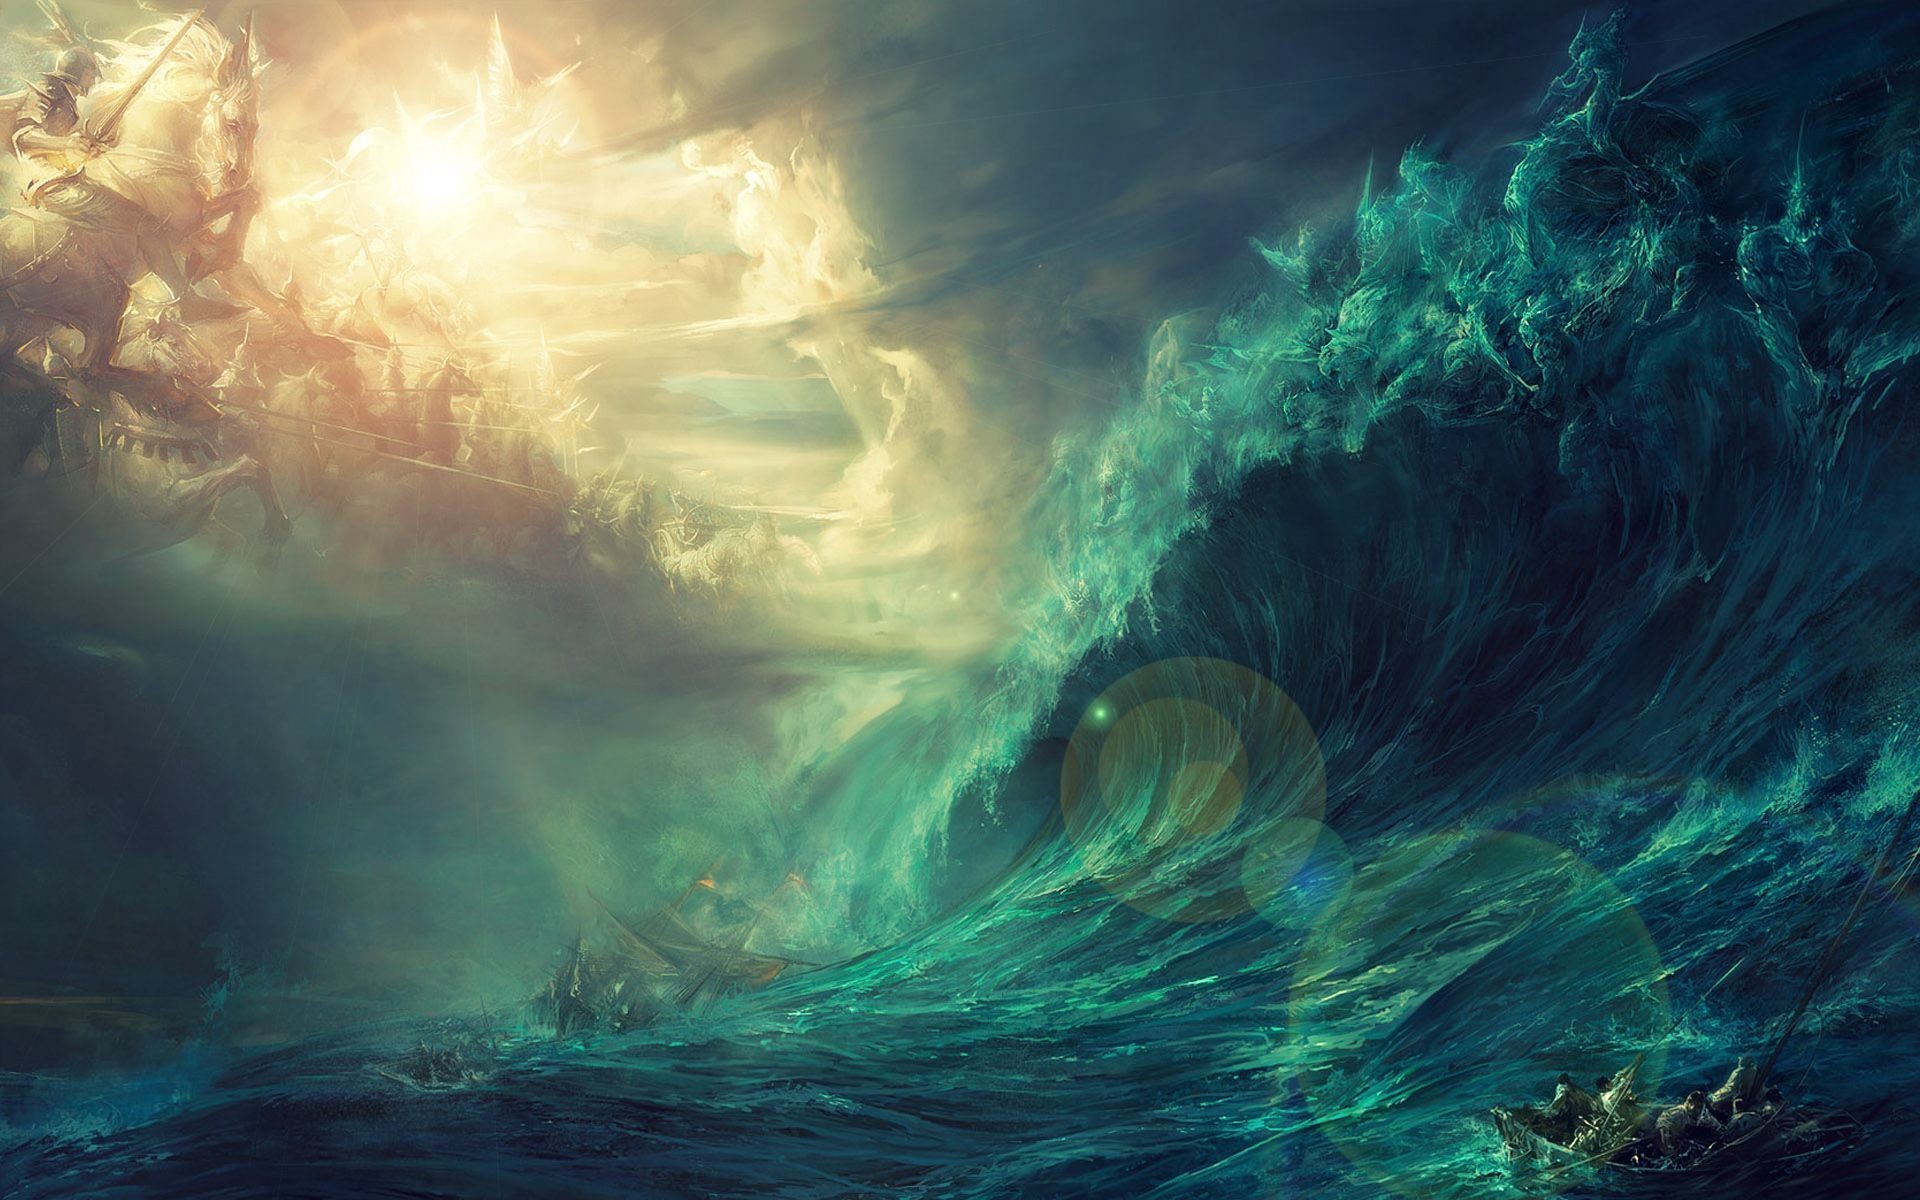 Wallpaper HD Raging Seas Waves Ocean Storm Rough Chop 3840 X 1080 430